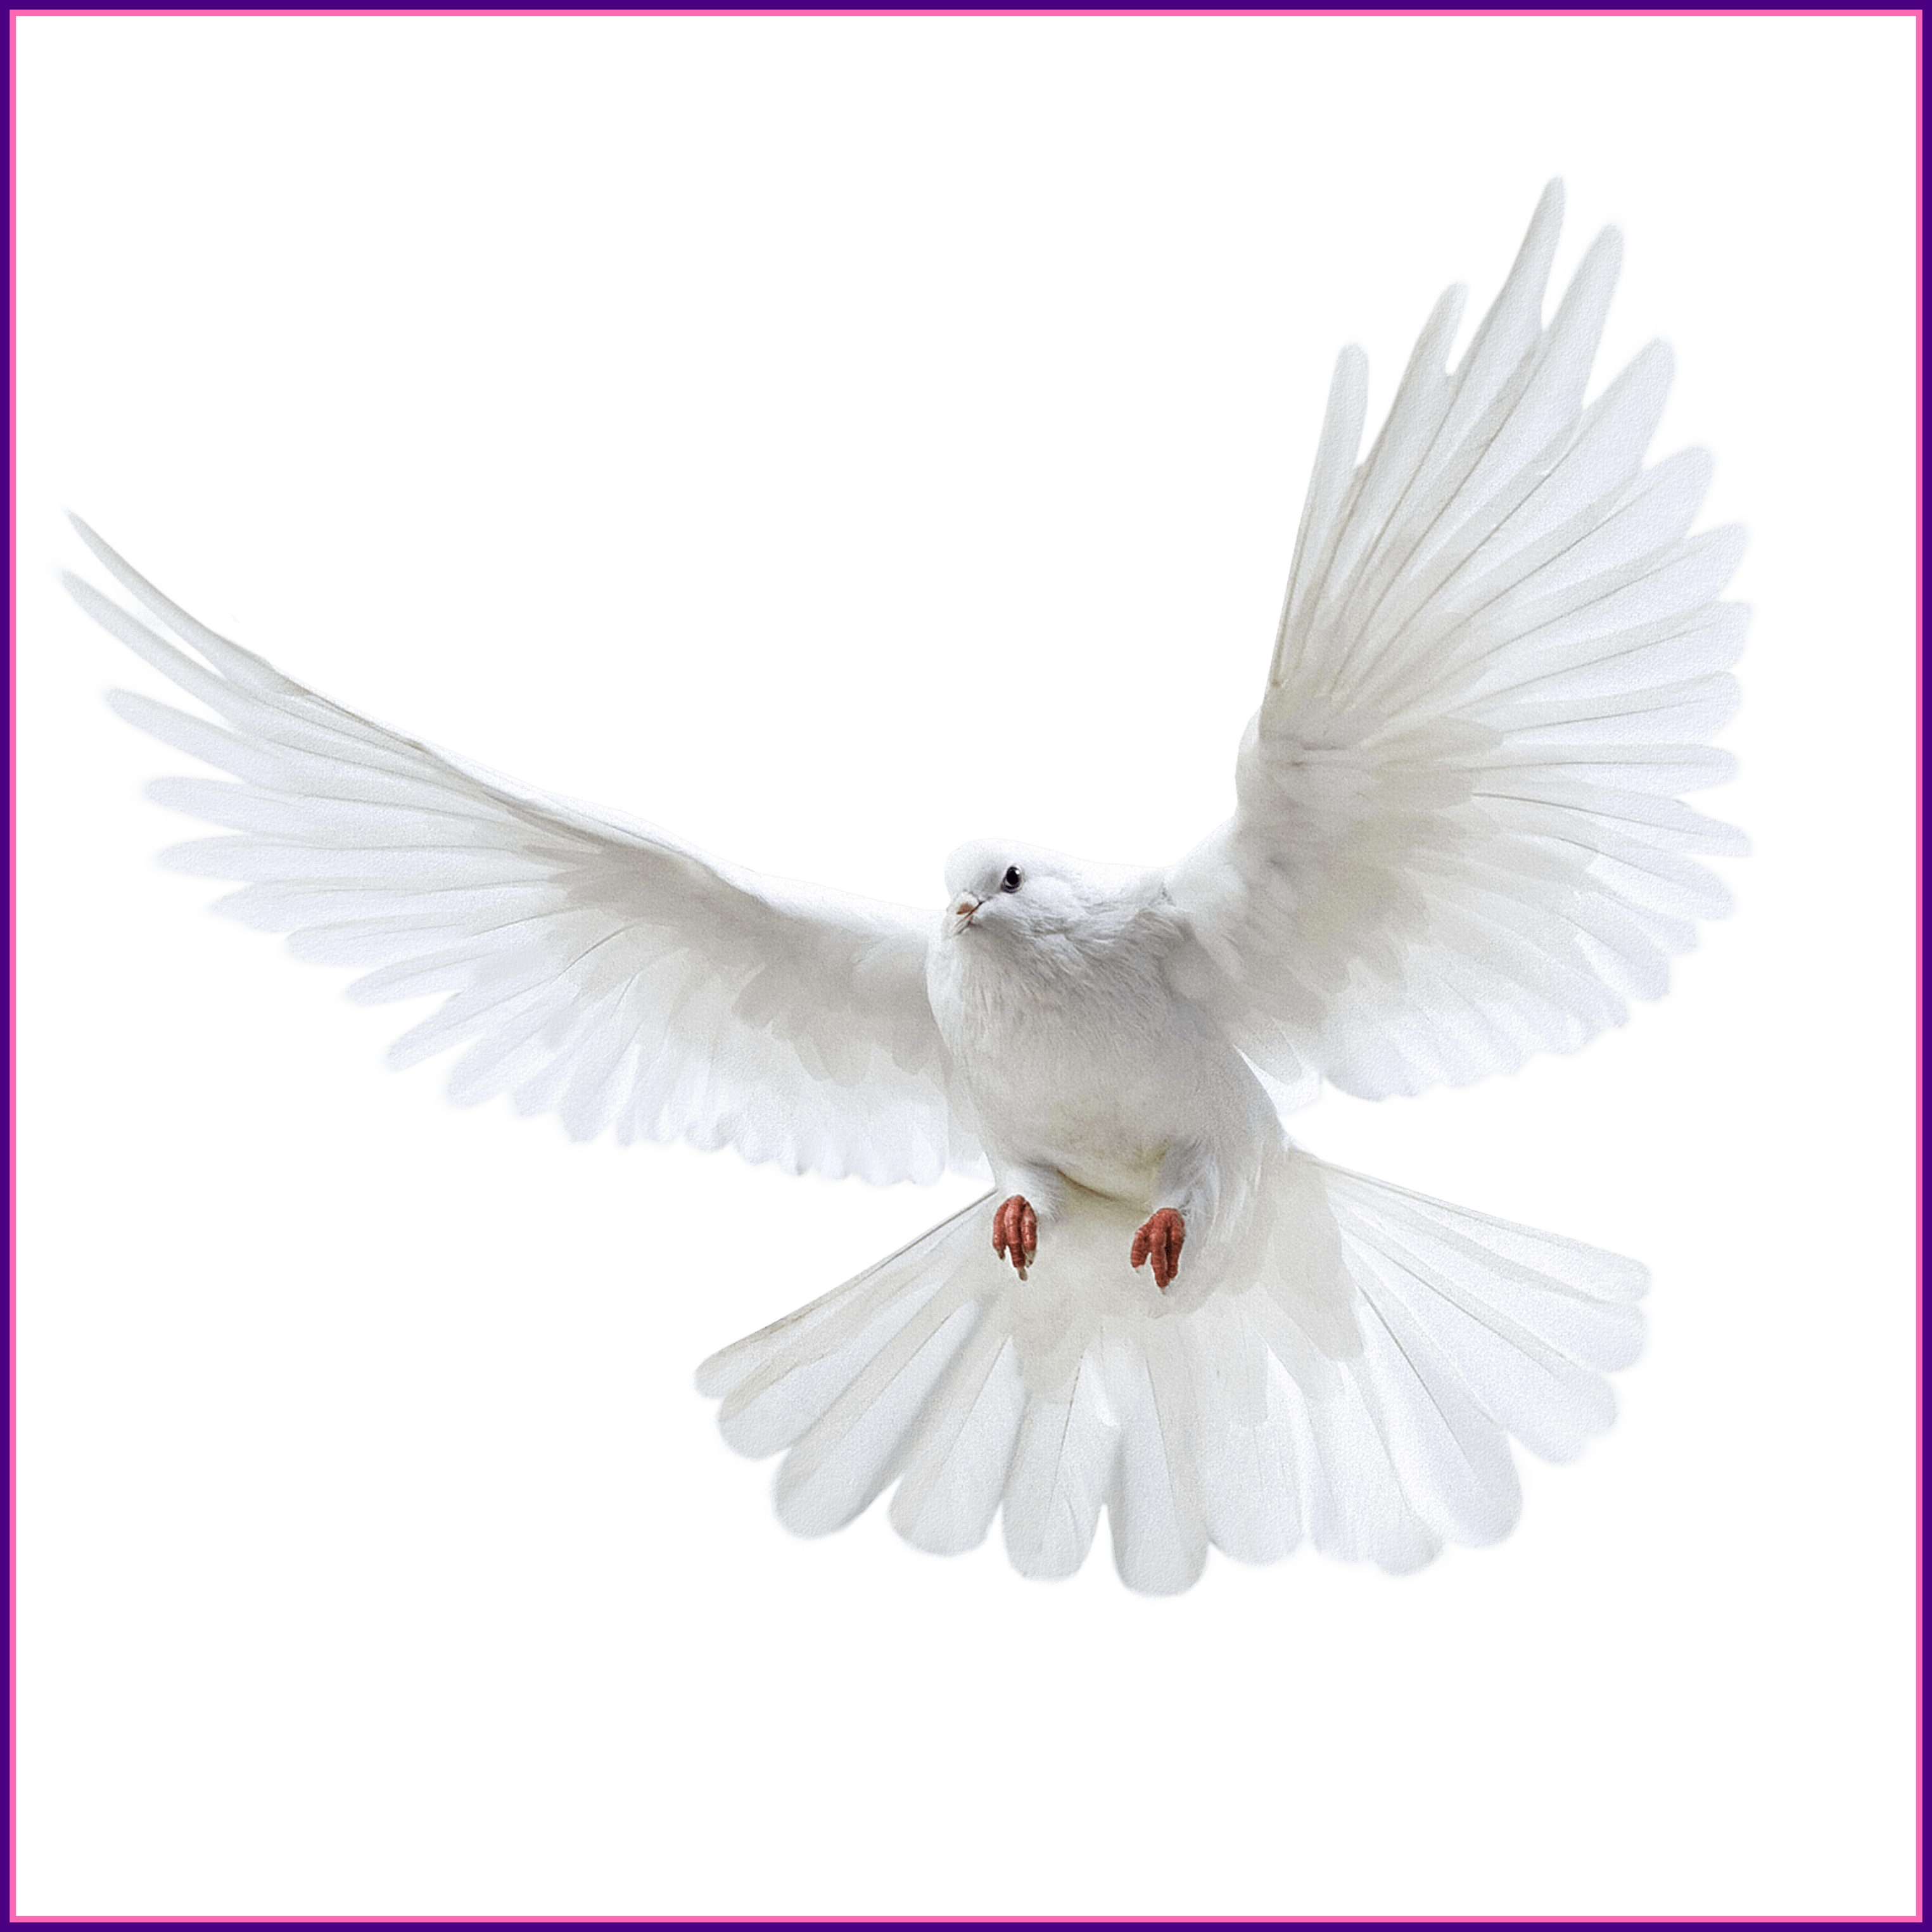  ideas of dove. Pigeon clipart in flight